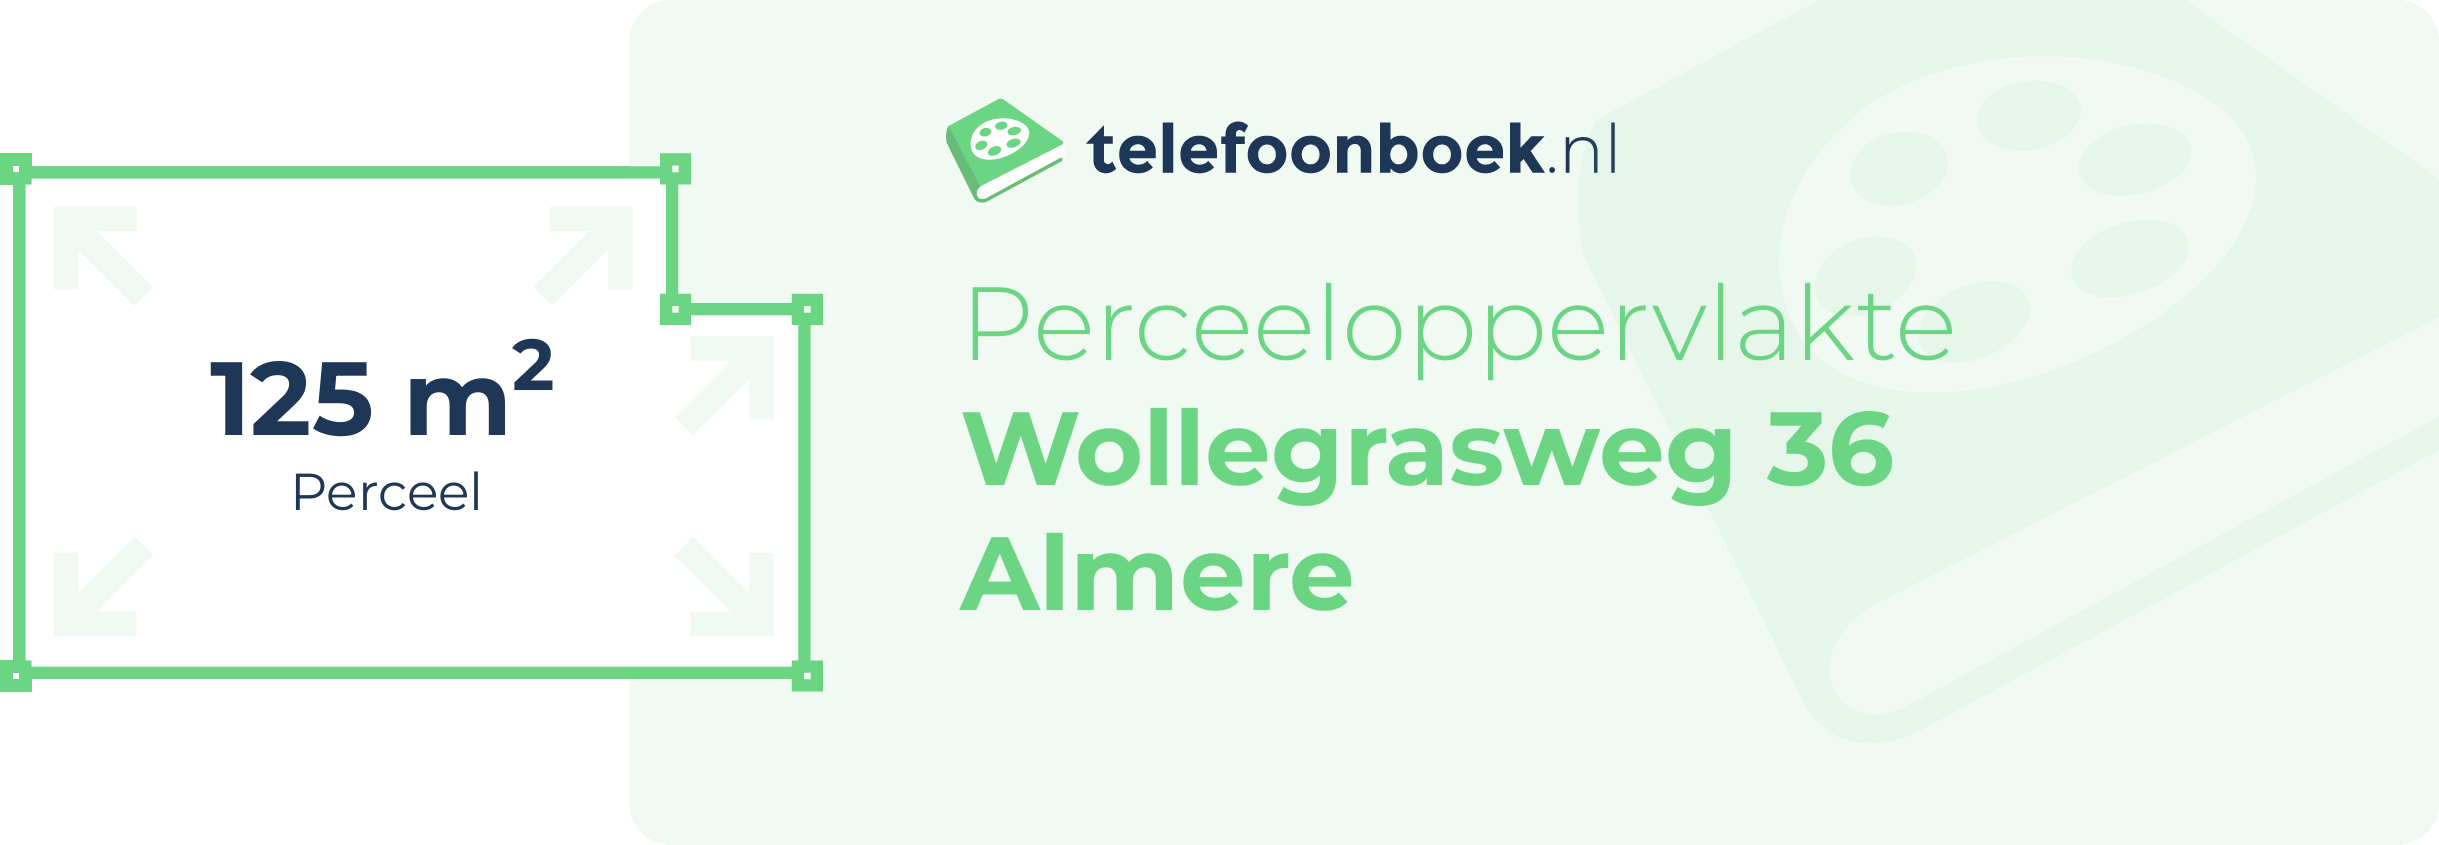 Perceeloppervlakte Wollegrasweg 36 Almere